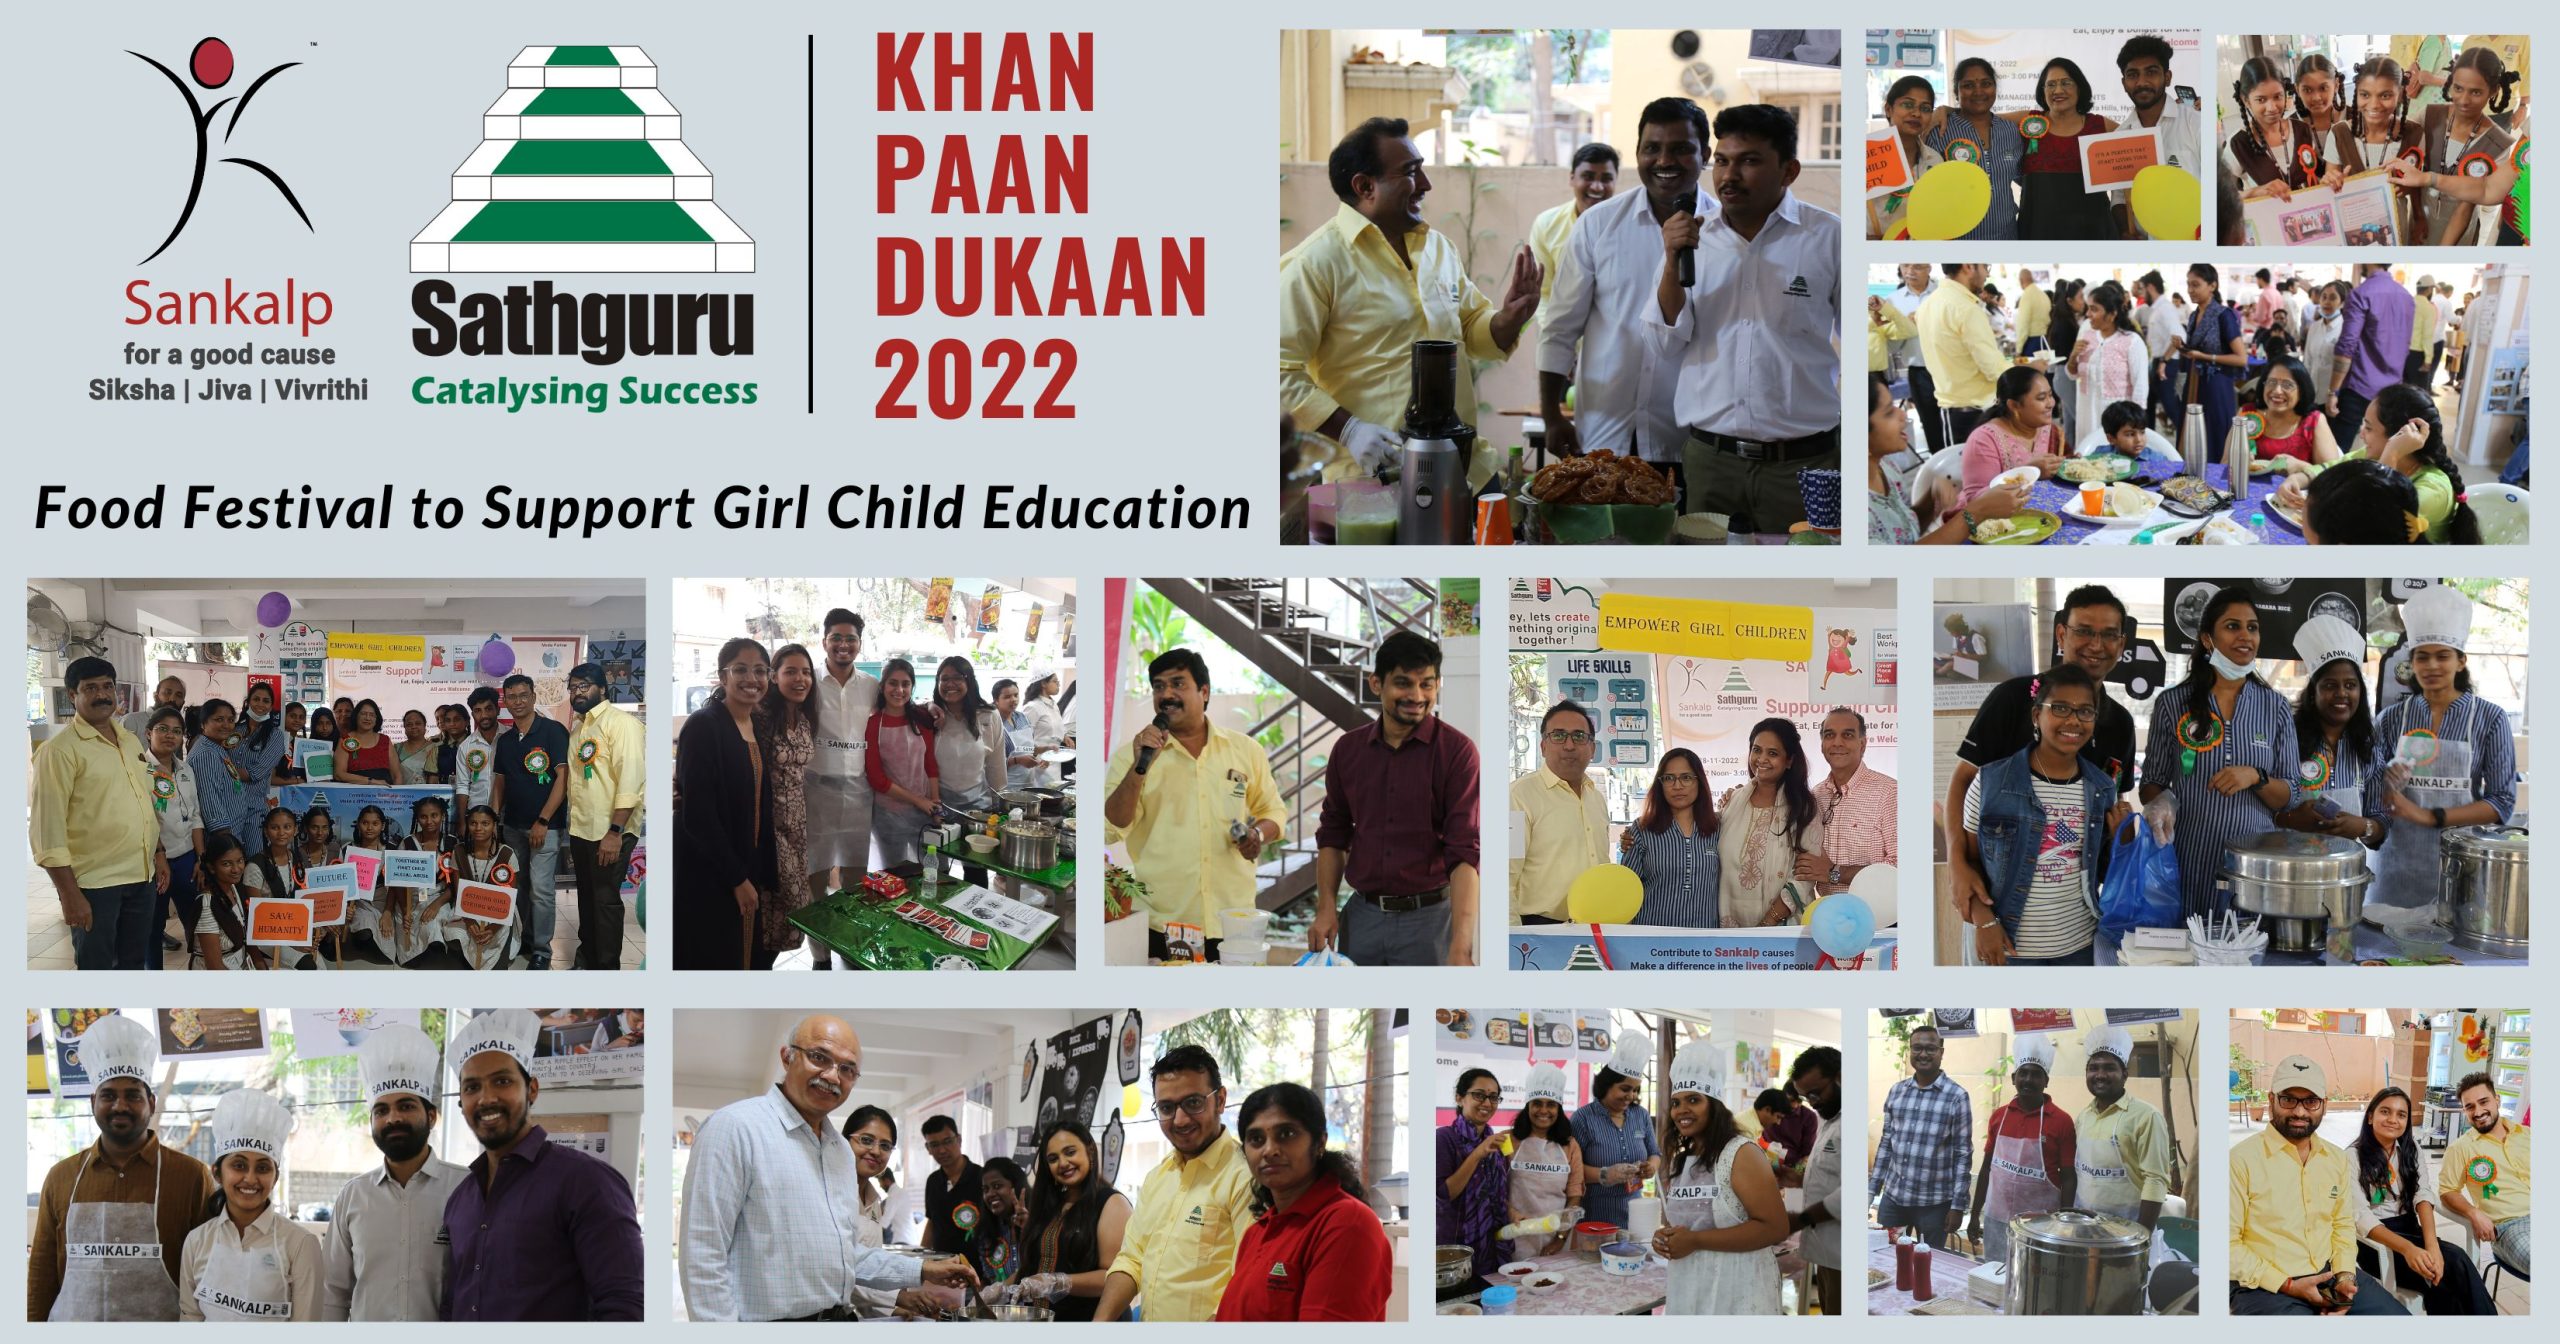 Sankalp Siksha - Khan Paan Dukaan 2022 Food festival to support girl child education!